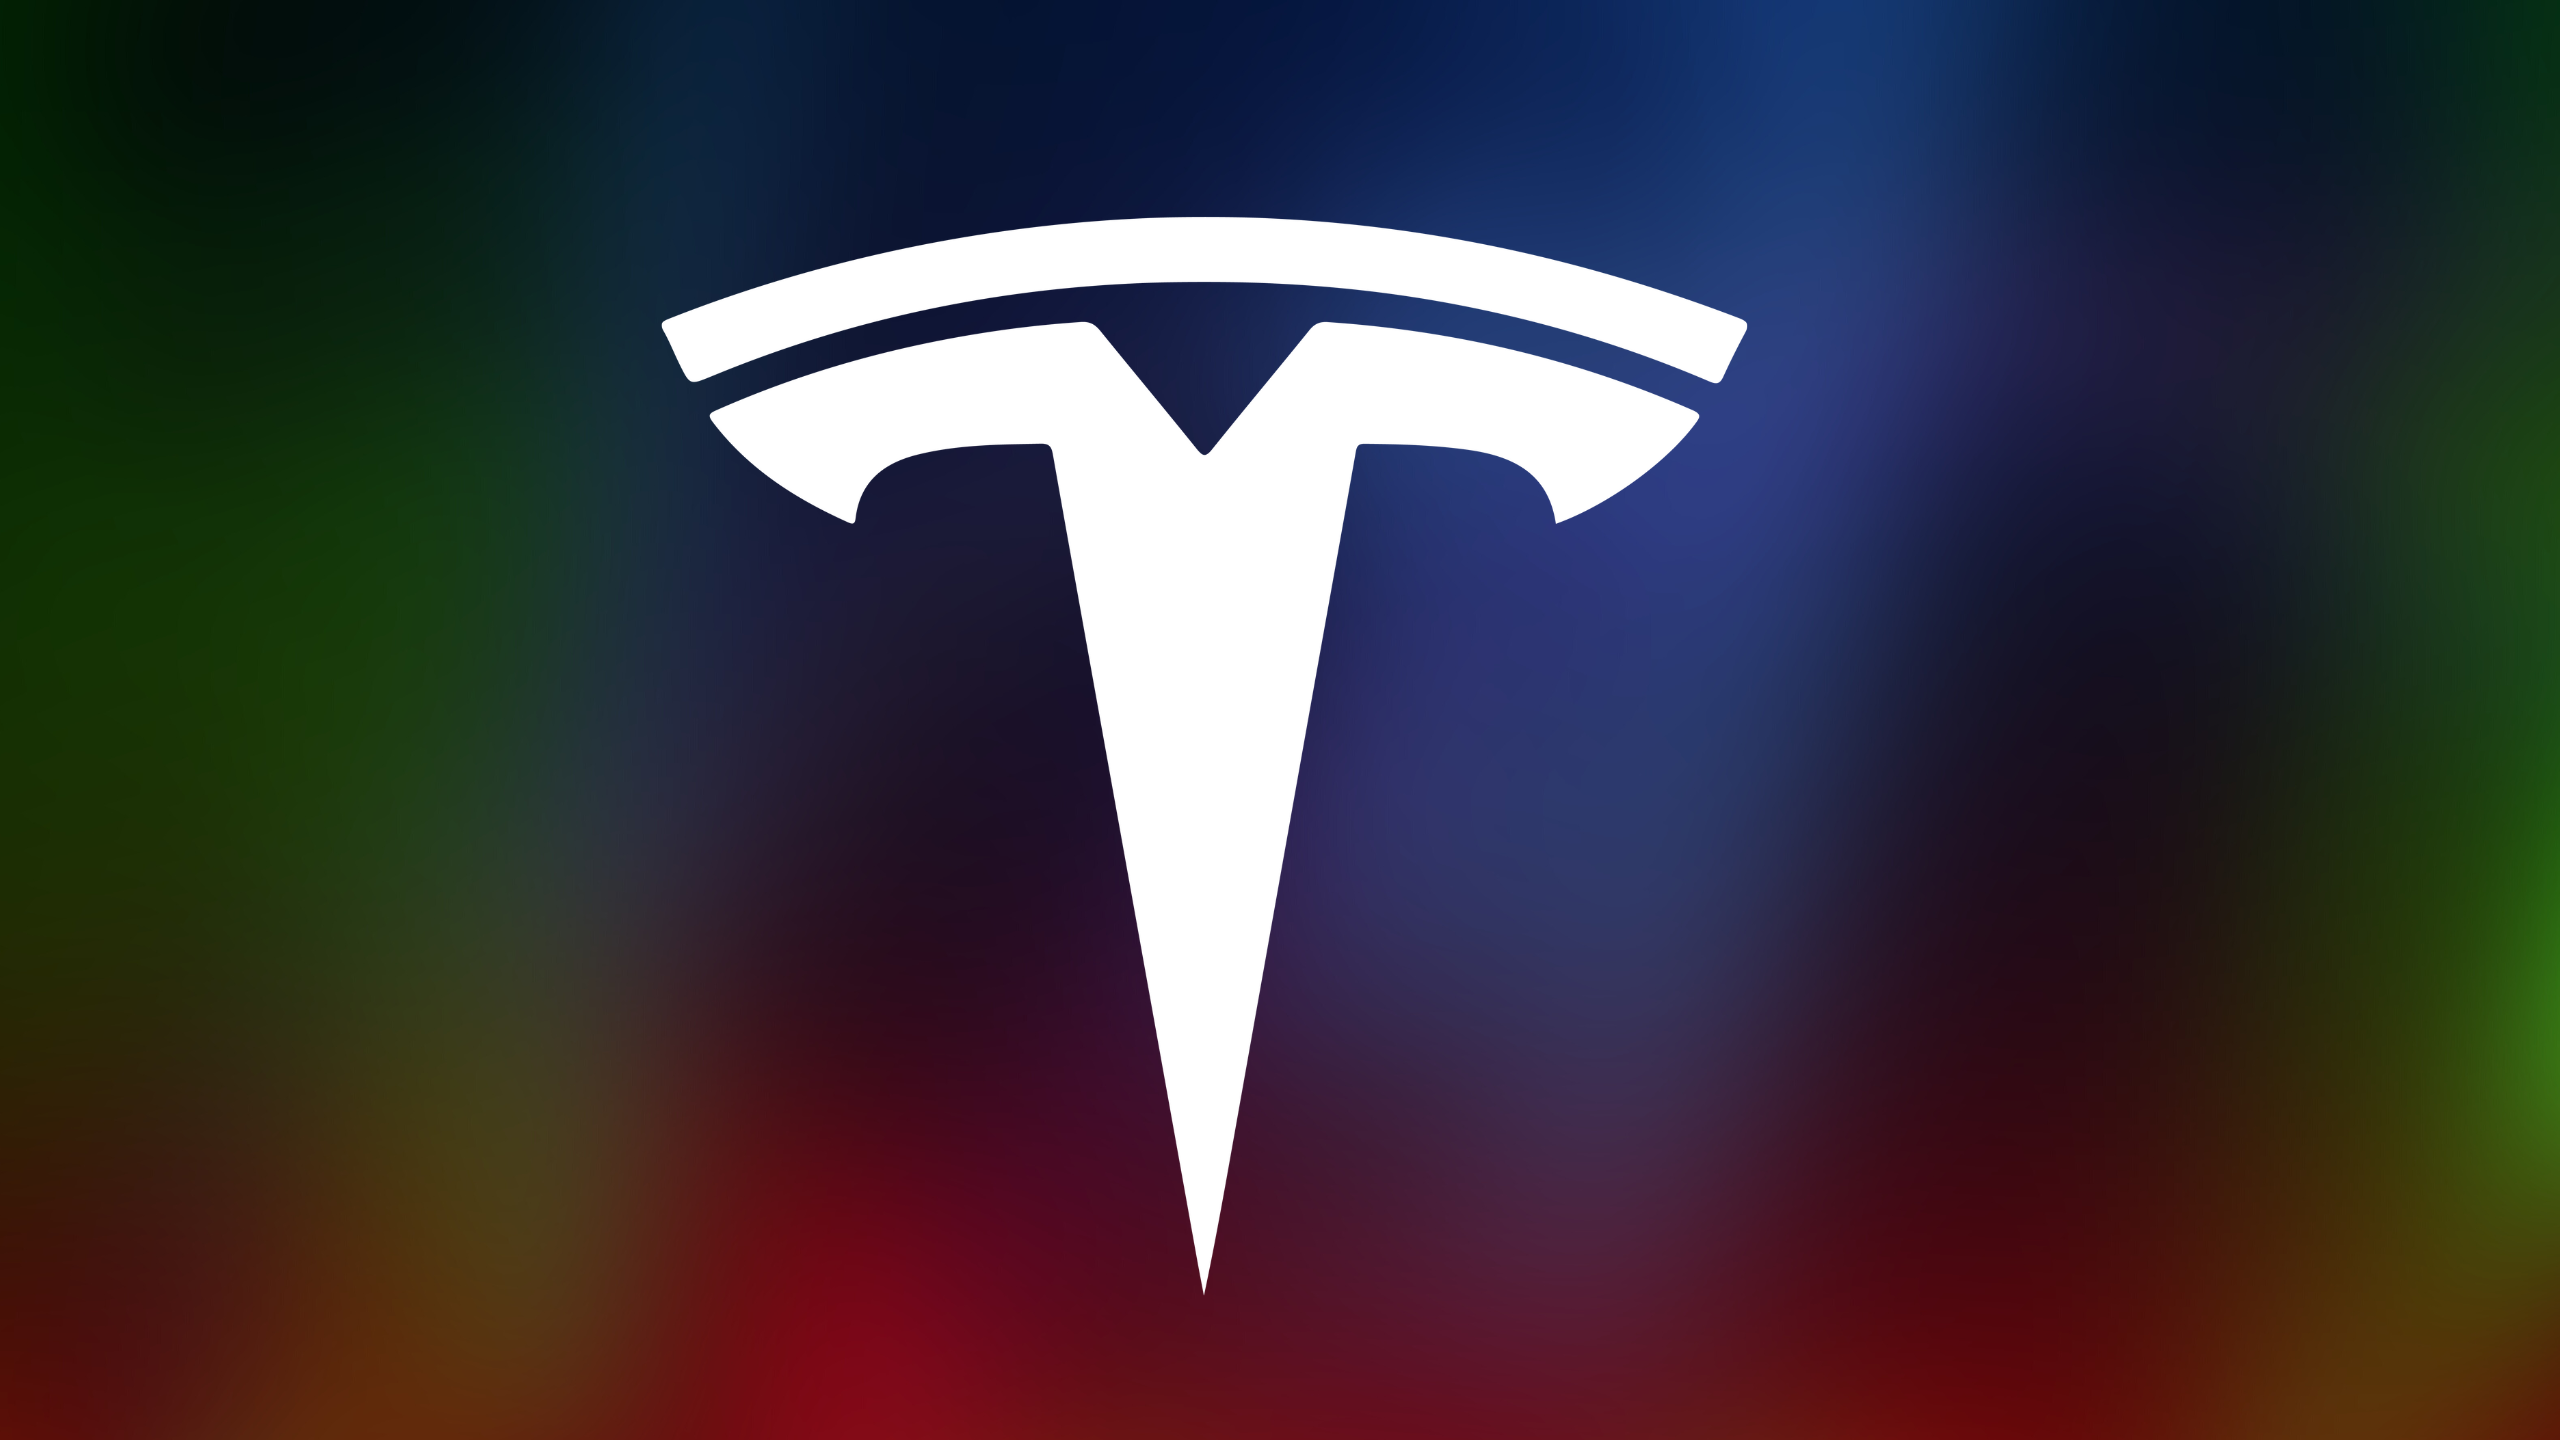 Tesla's investors continue to buy $TSLA shares despite US-China drama